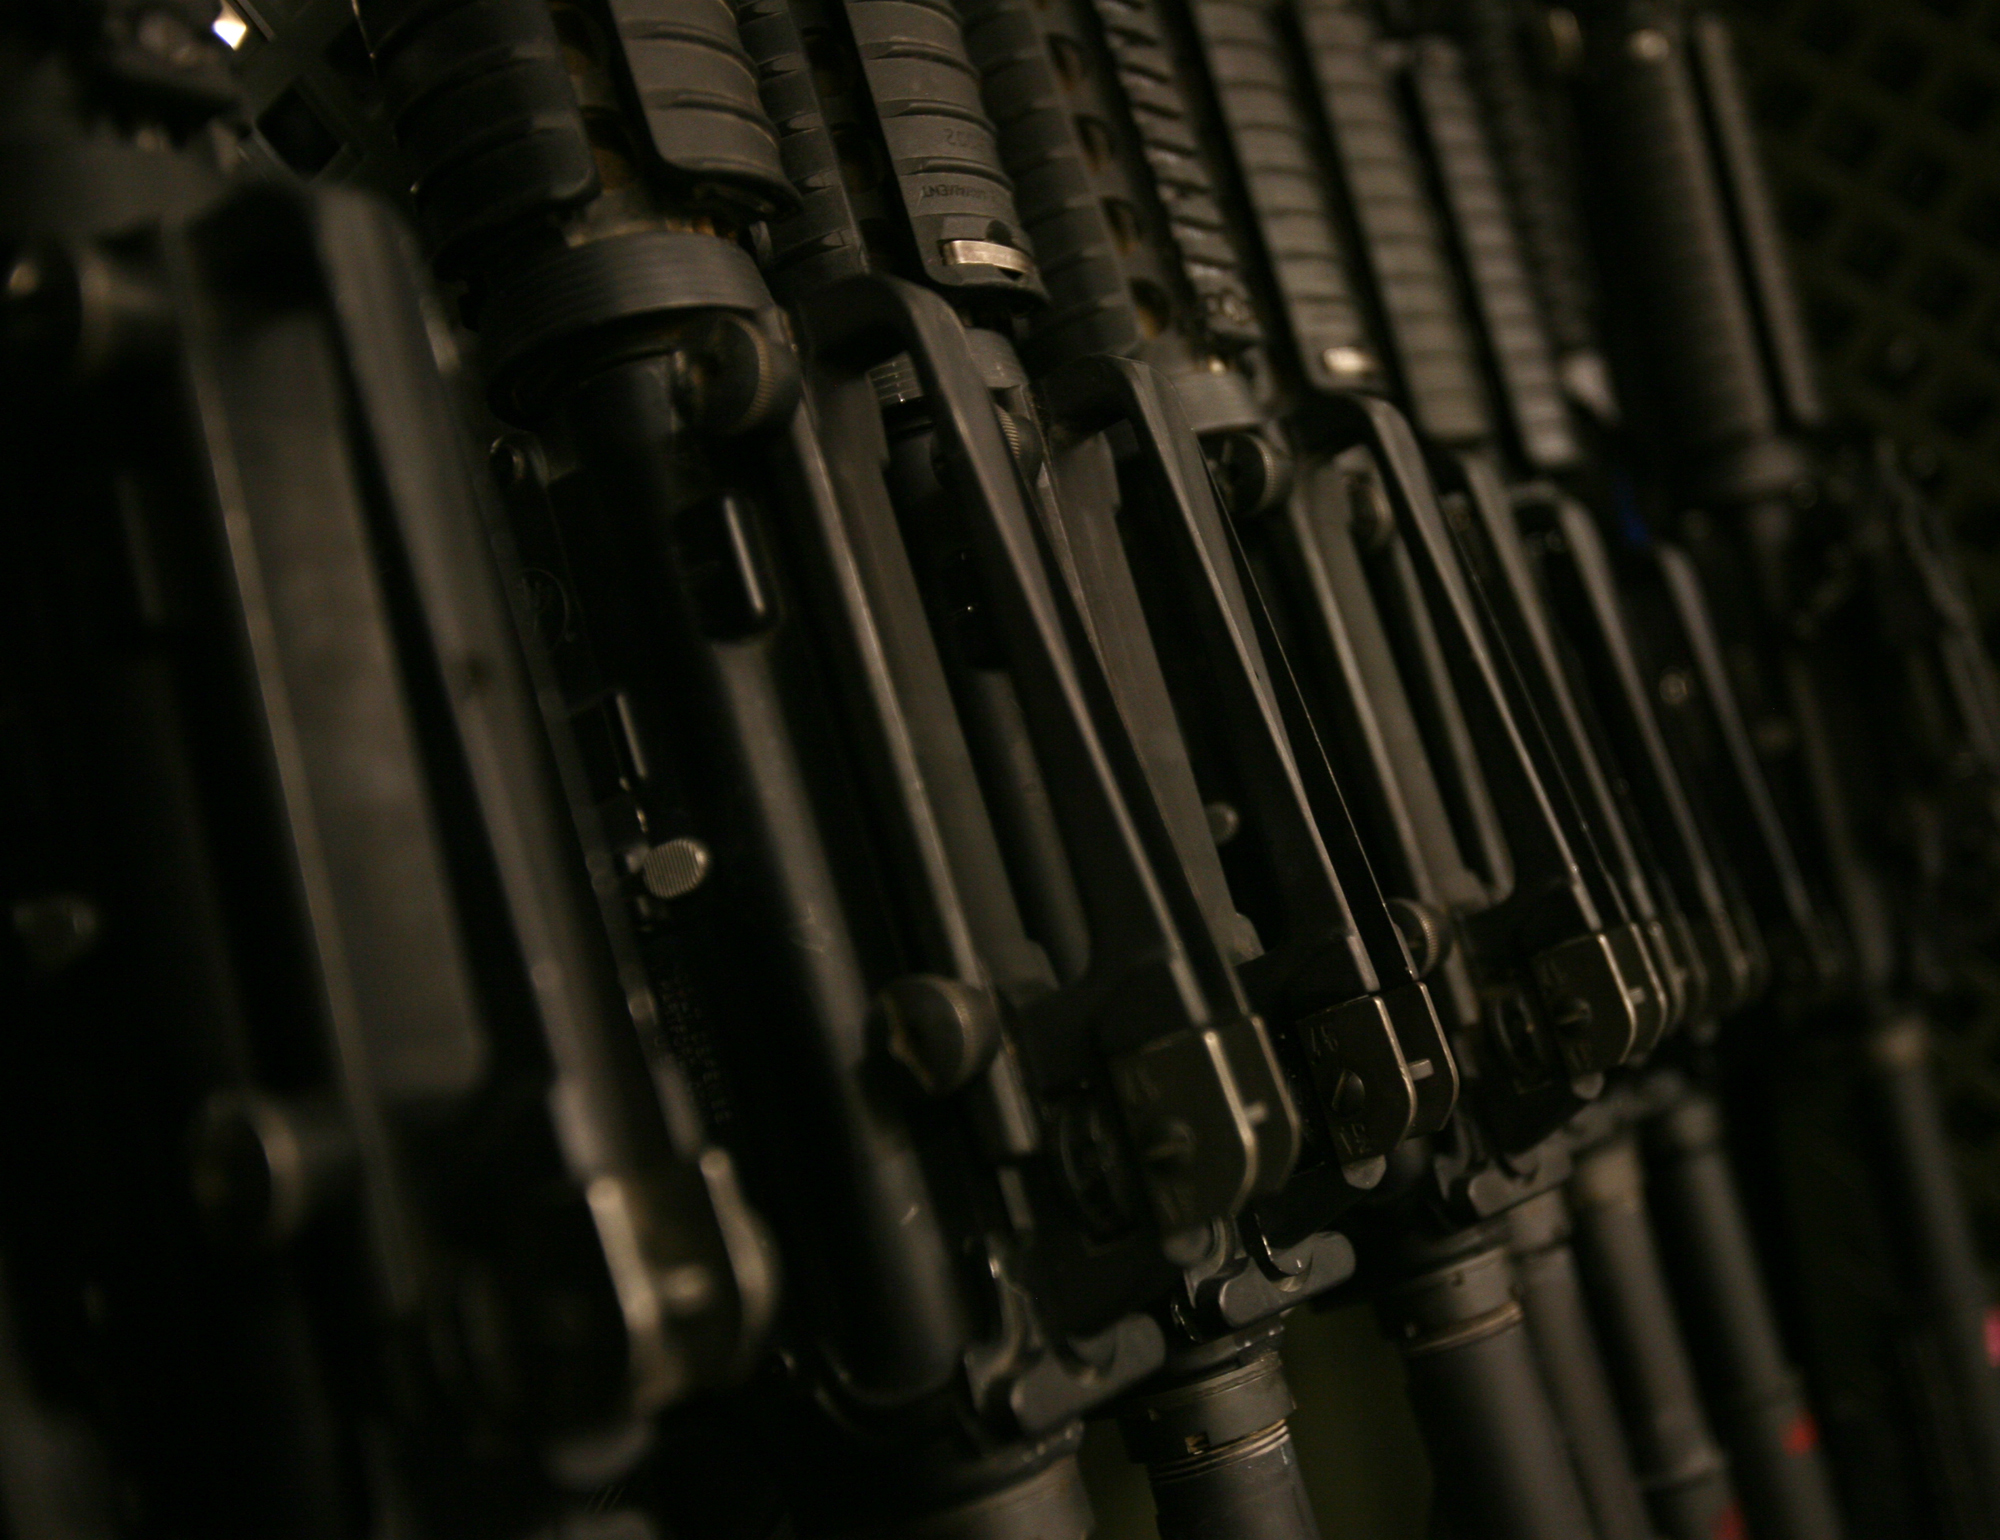 винтовки, пистолеты, M16, M4, M16A4, STANAG, 5.56x45mm НАТО - обои на рабочий стол